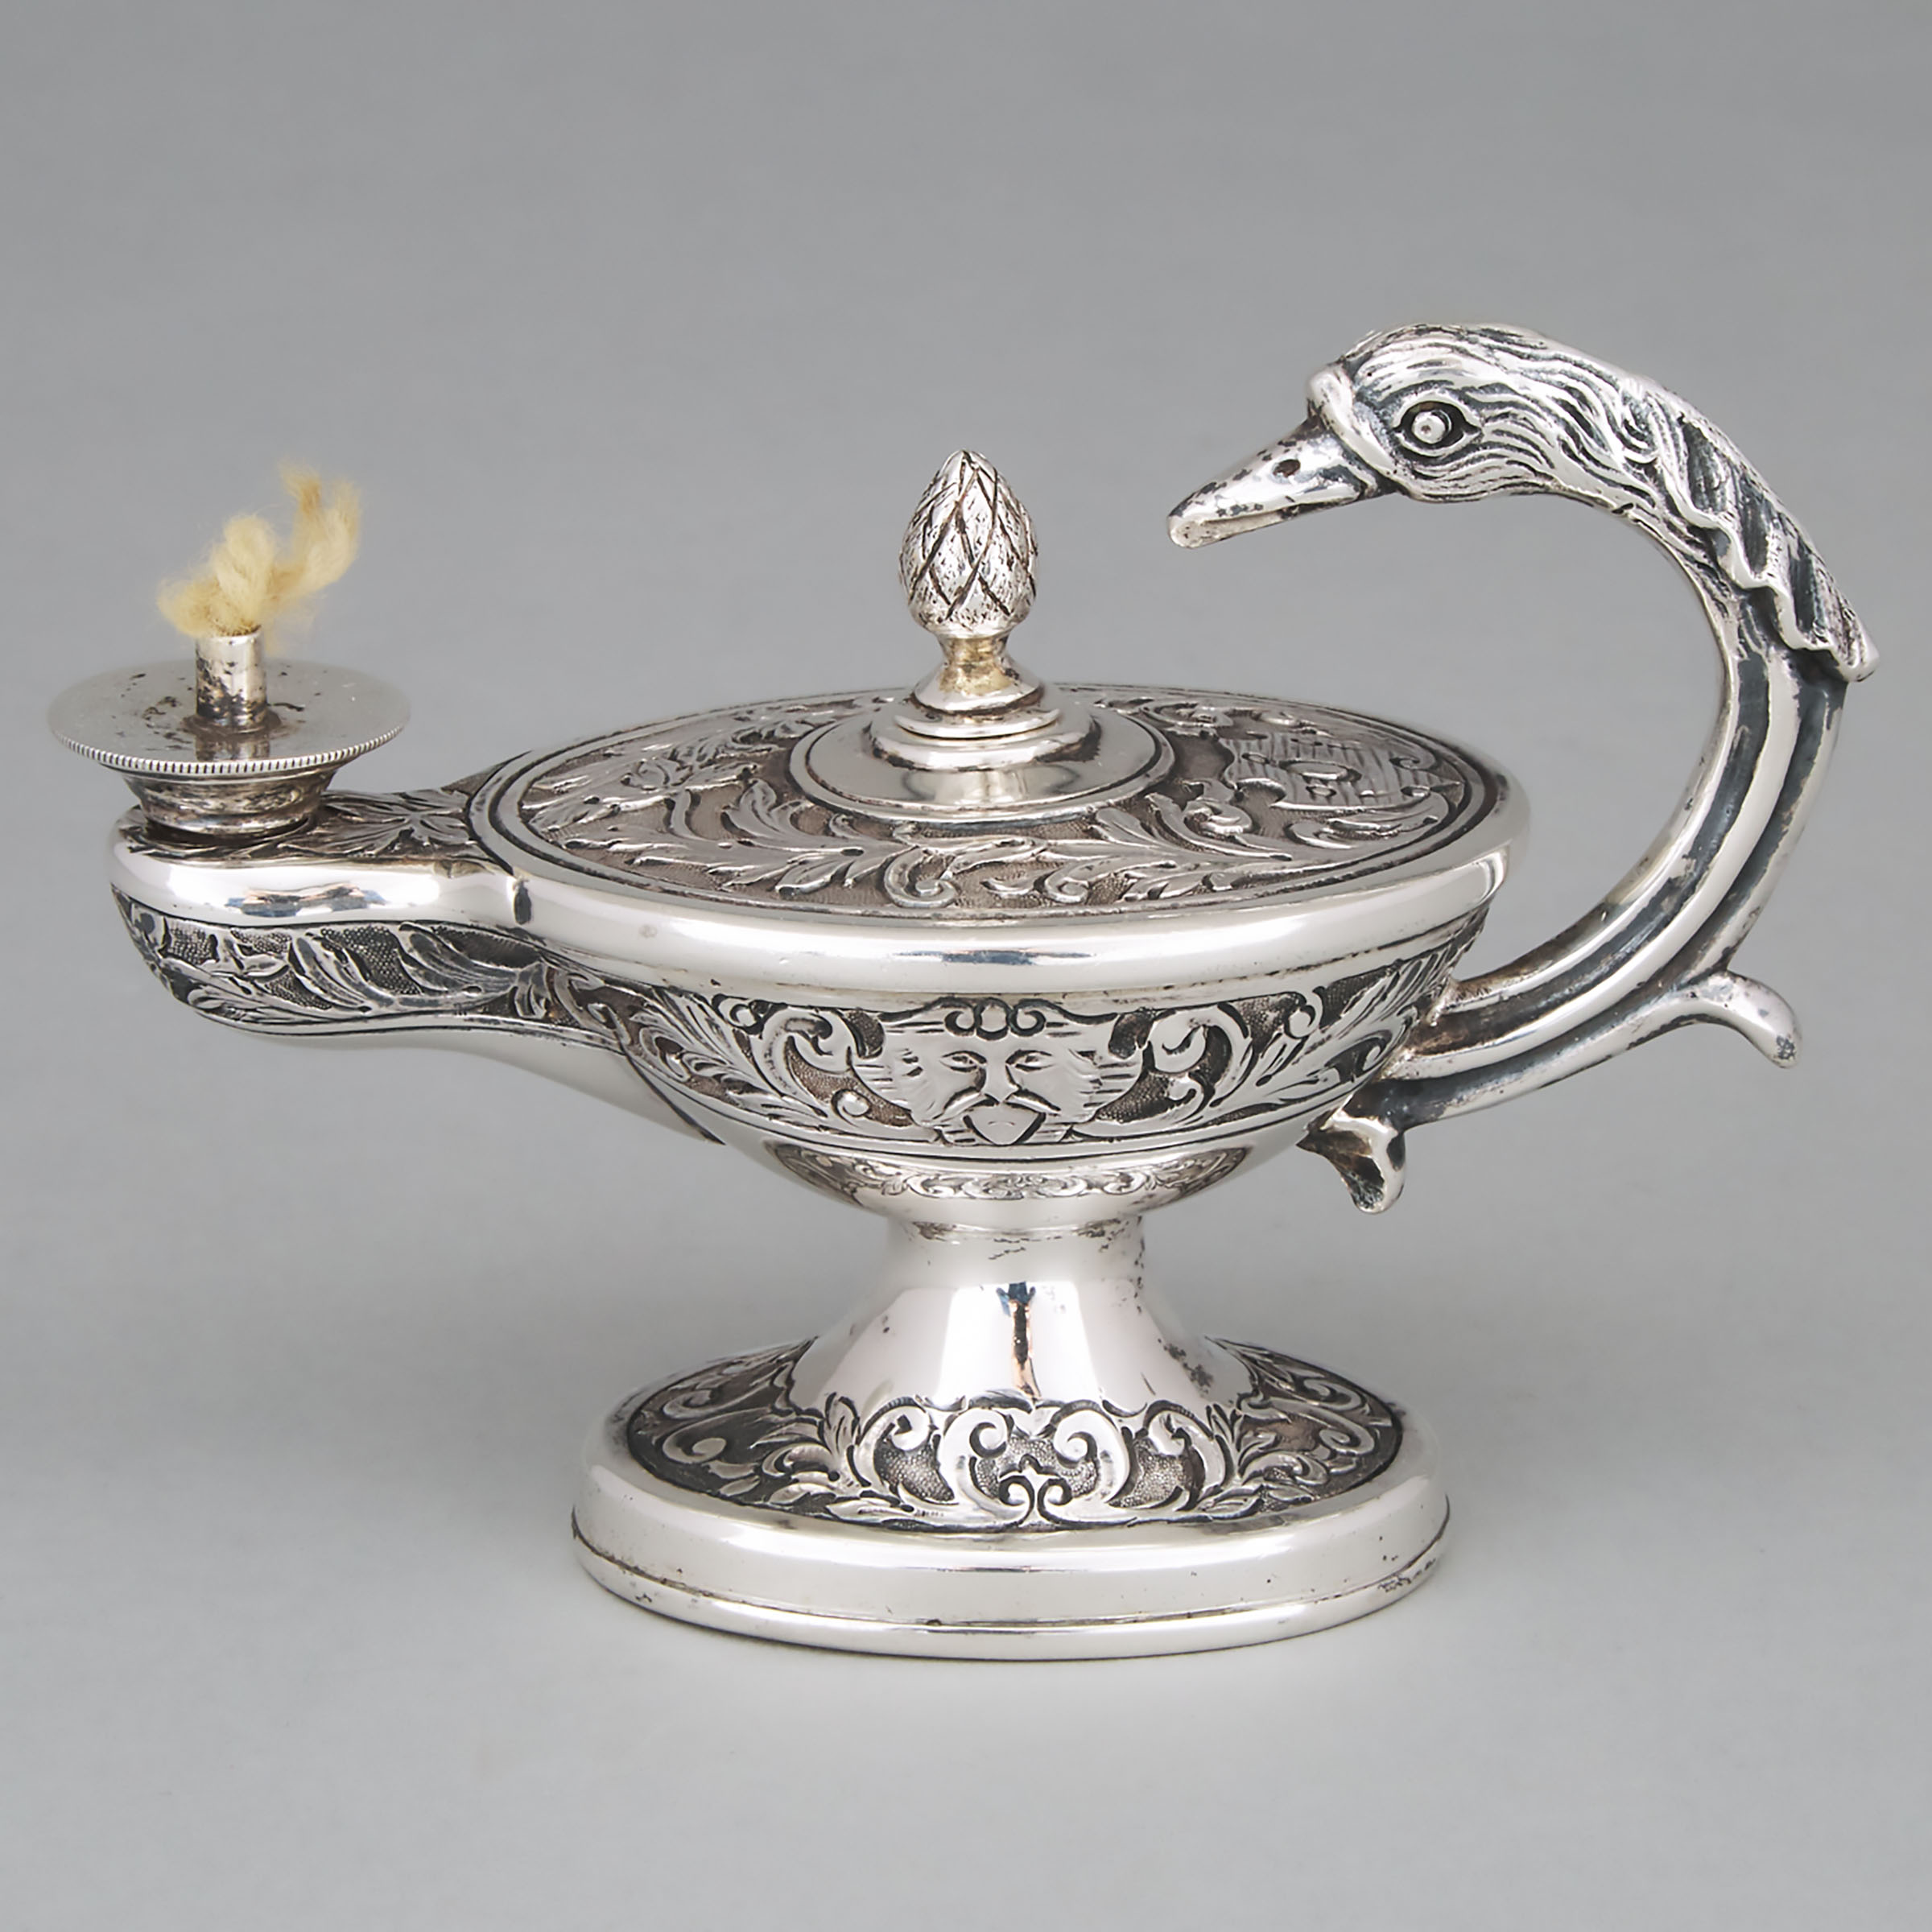 Edwardian Silver 'Aladdin's Lamp' Table Cigar Lighter, Joseph Braham, London, 1905